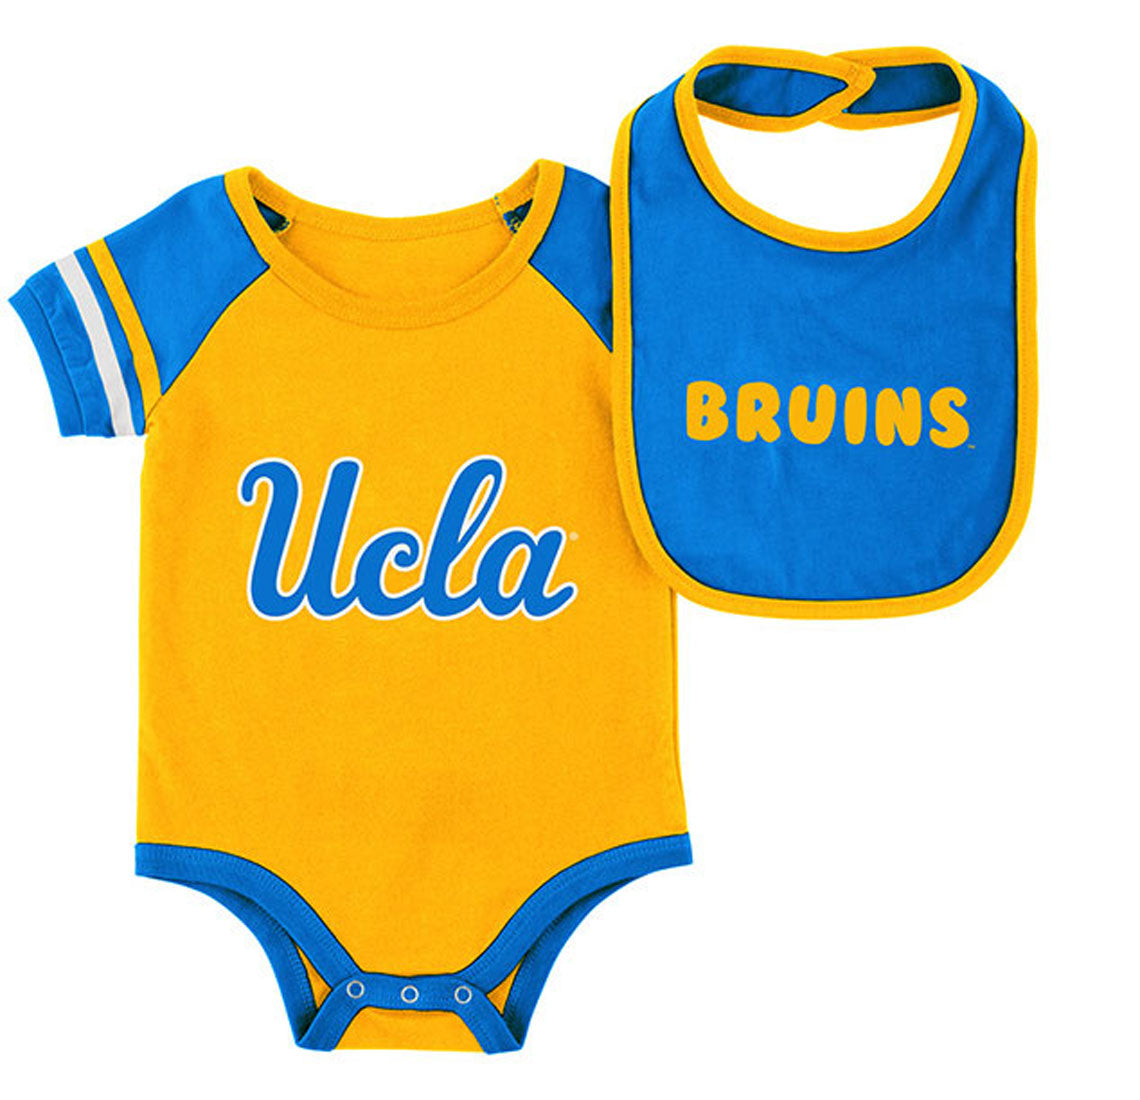 UCLA Final Four gear: Where to buy shirts, hats